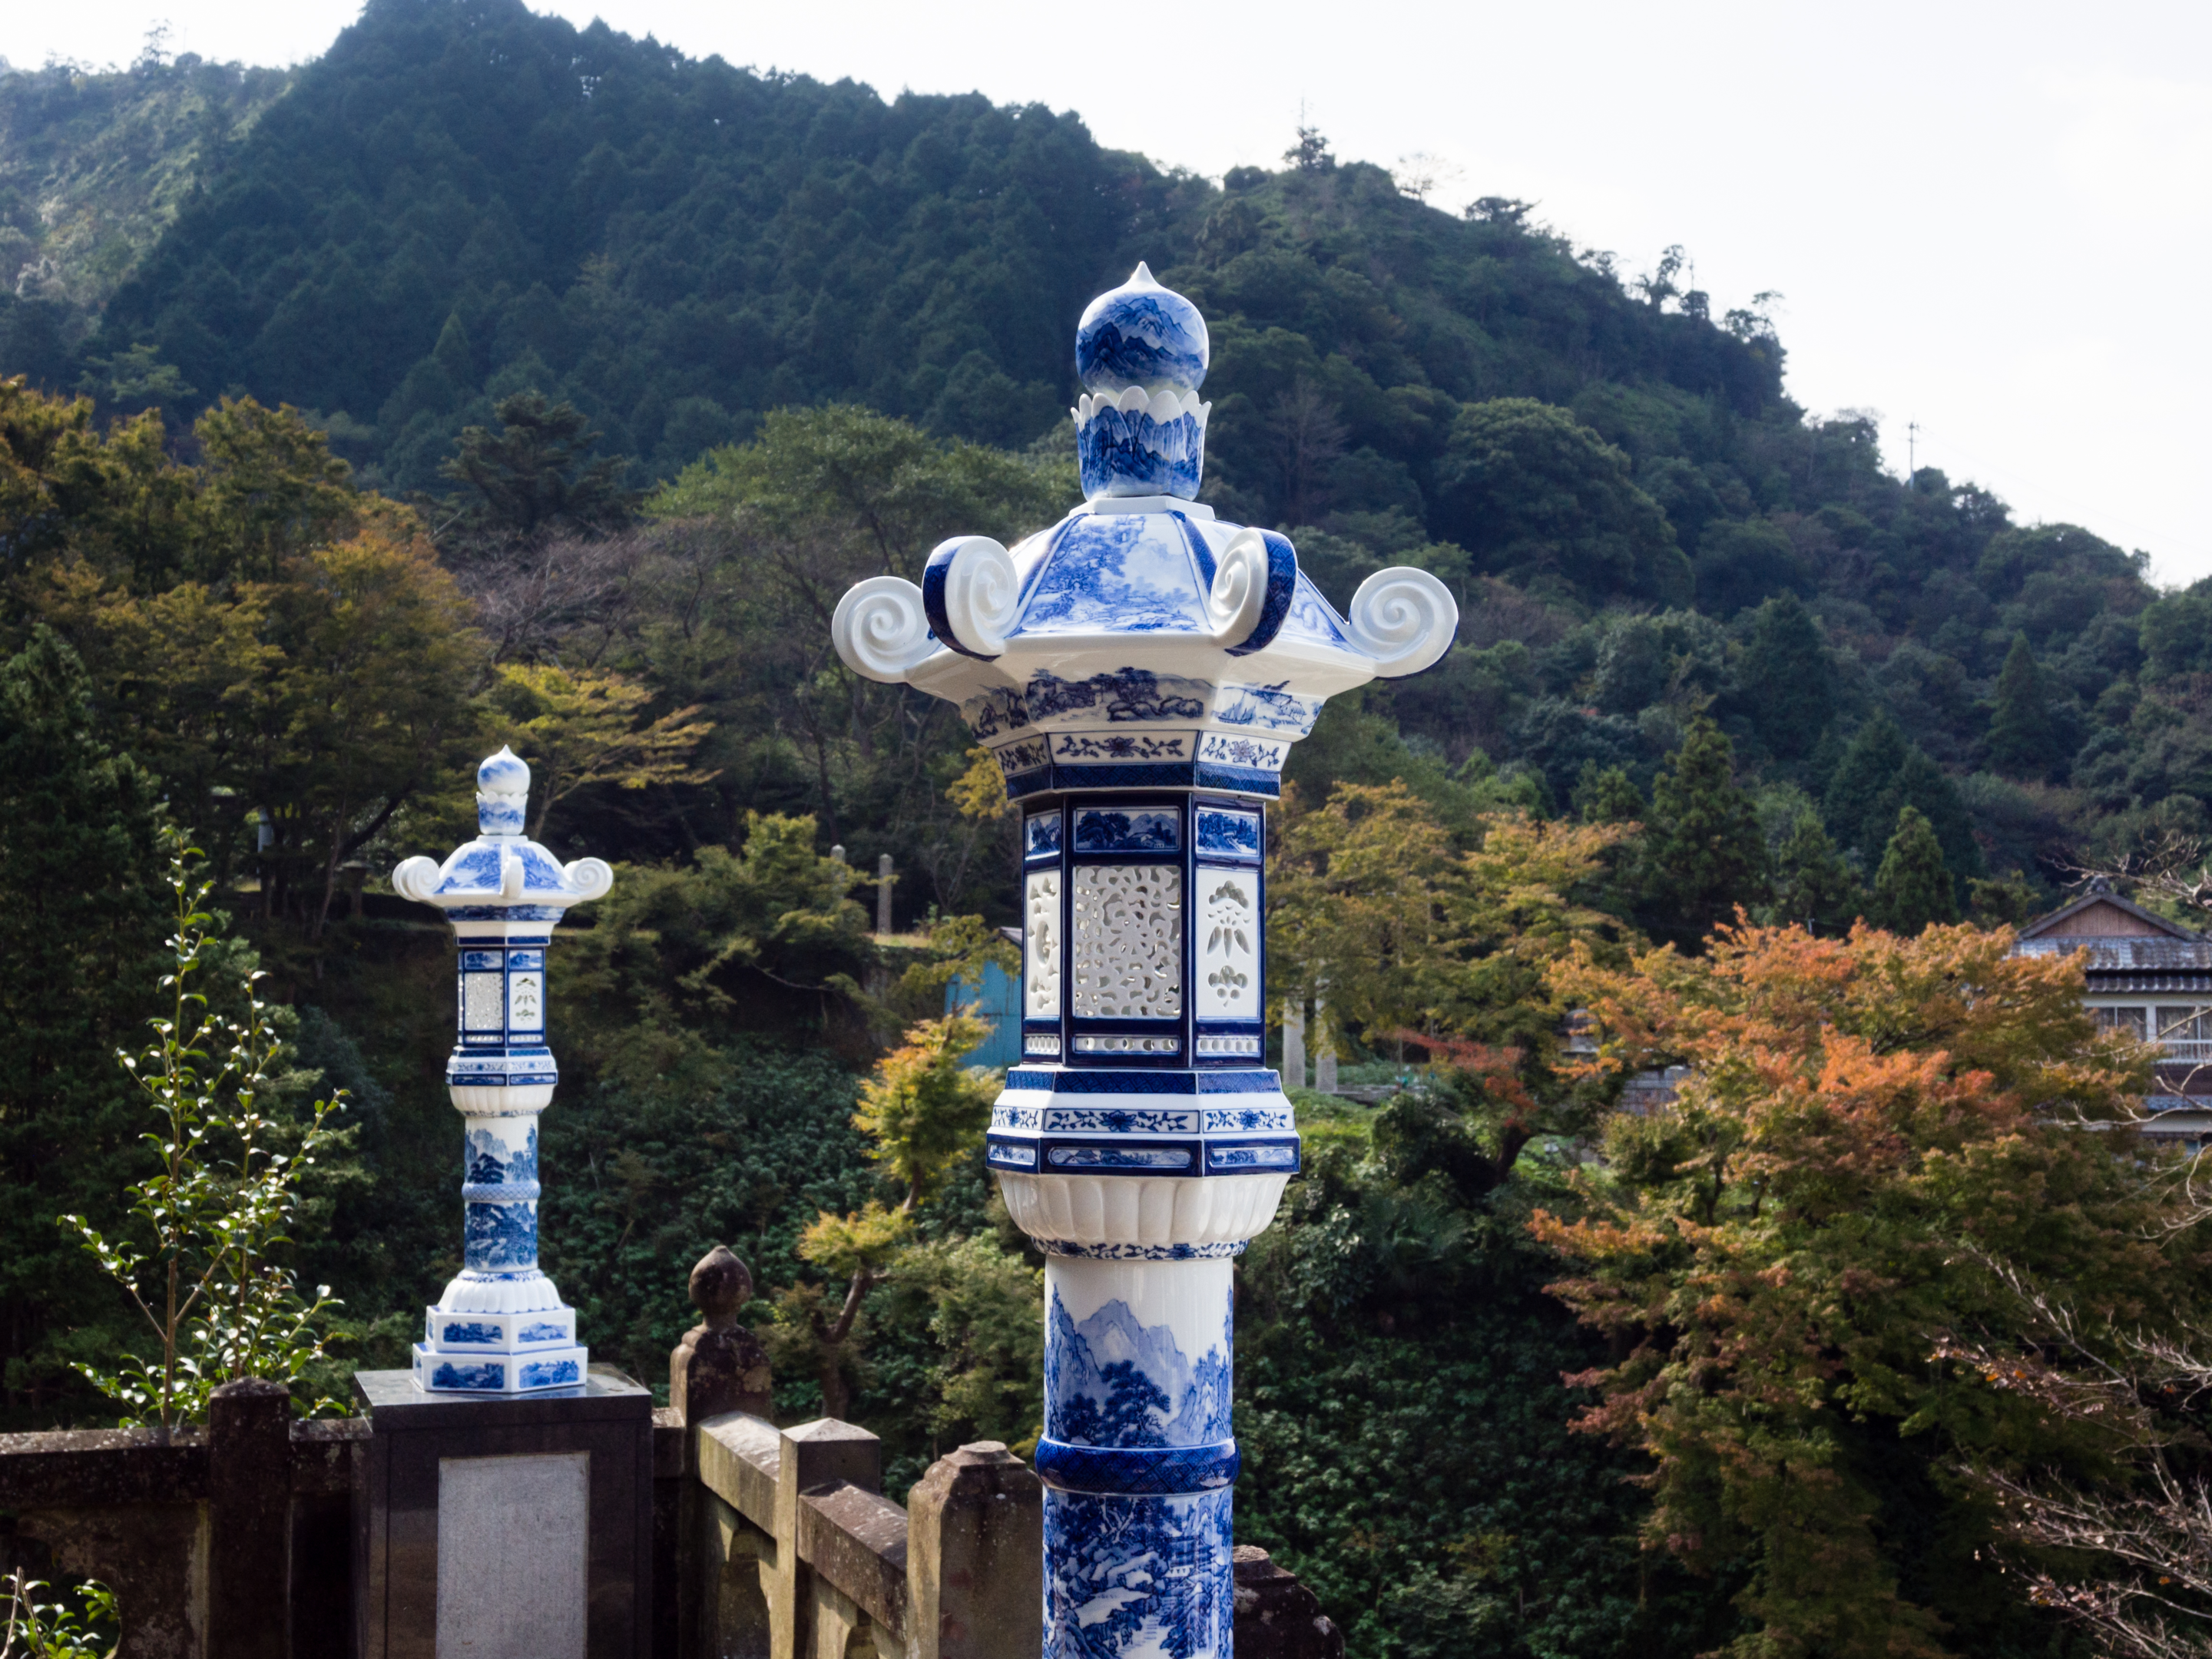 Arita-yaki in the shape of traditional lantern